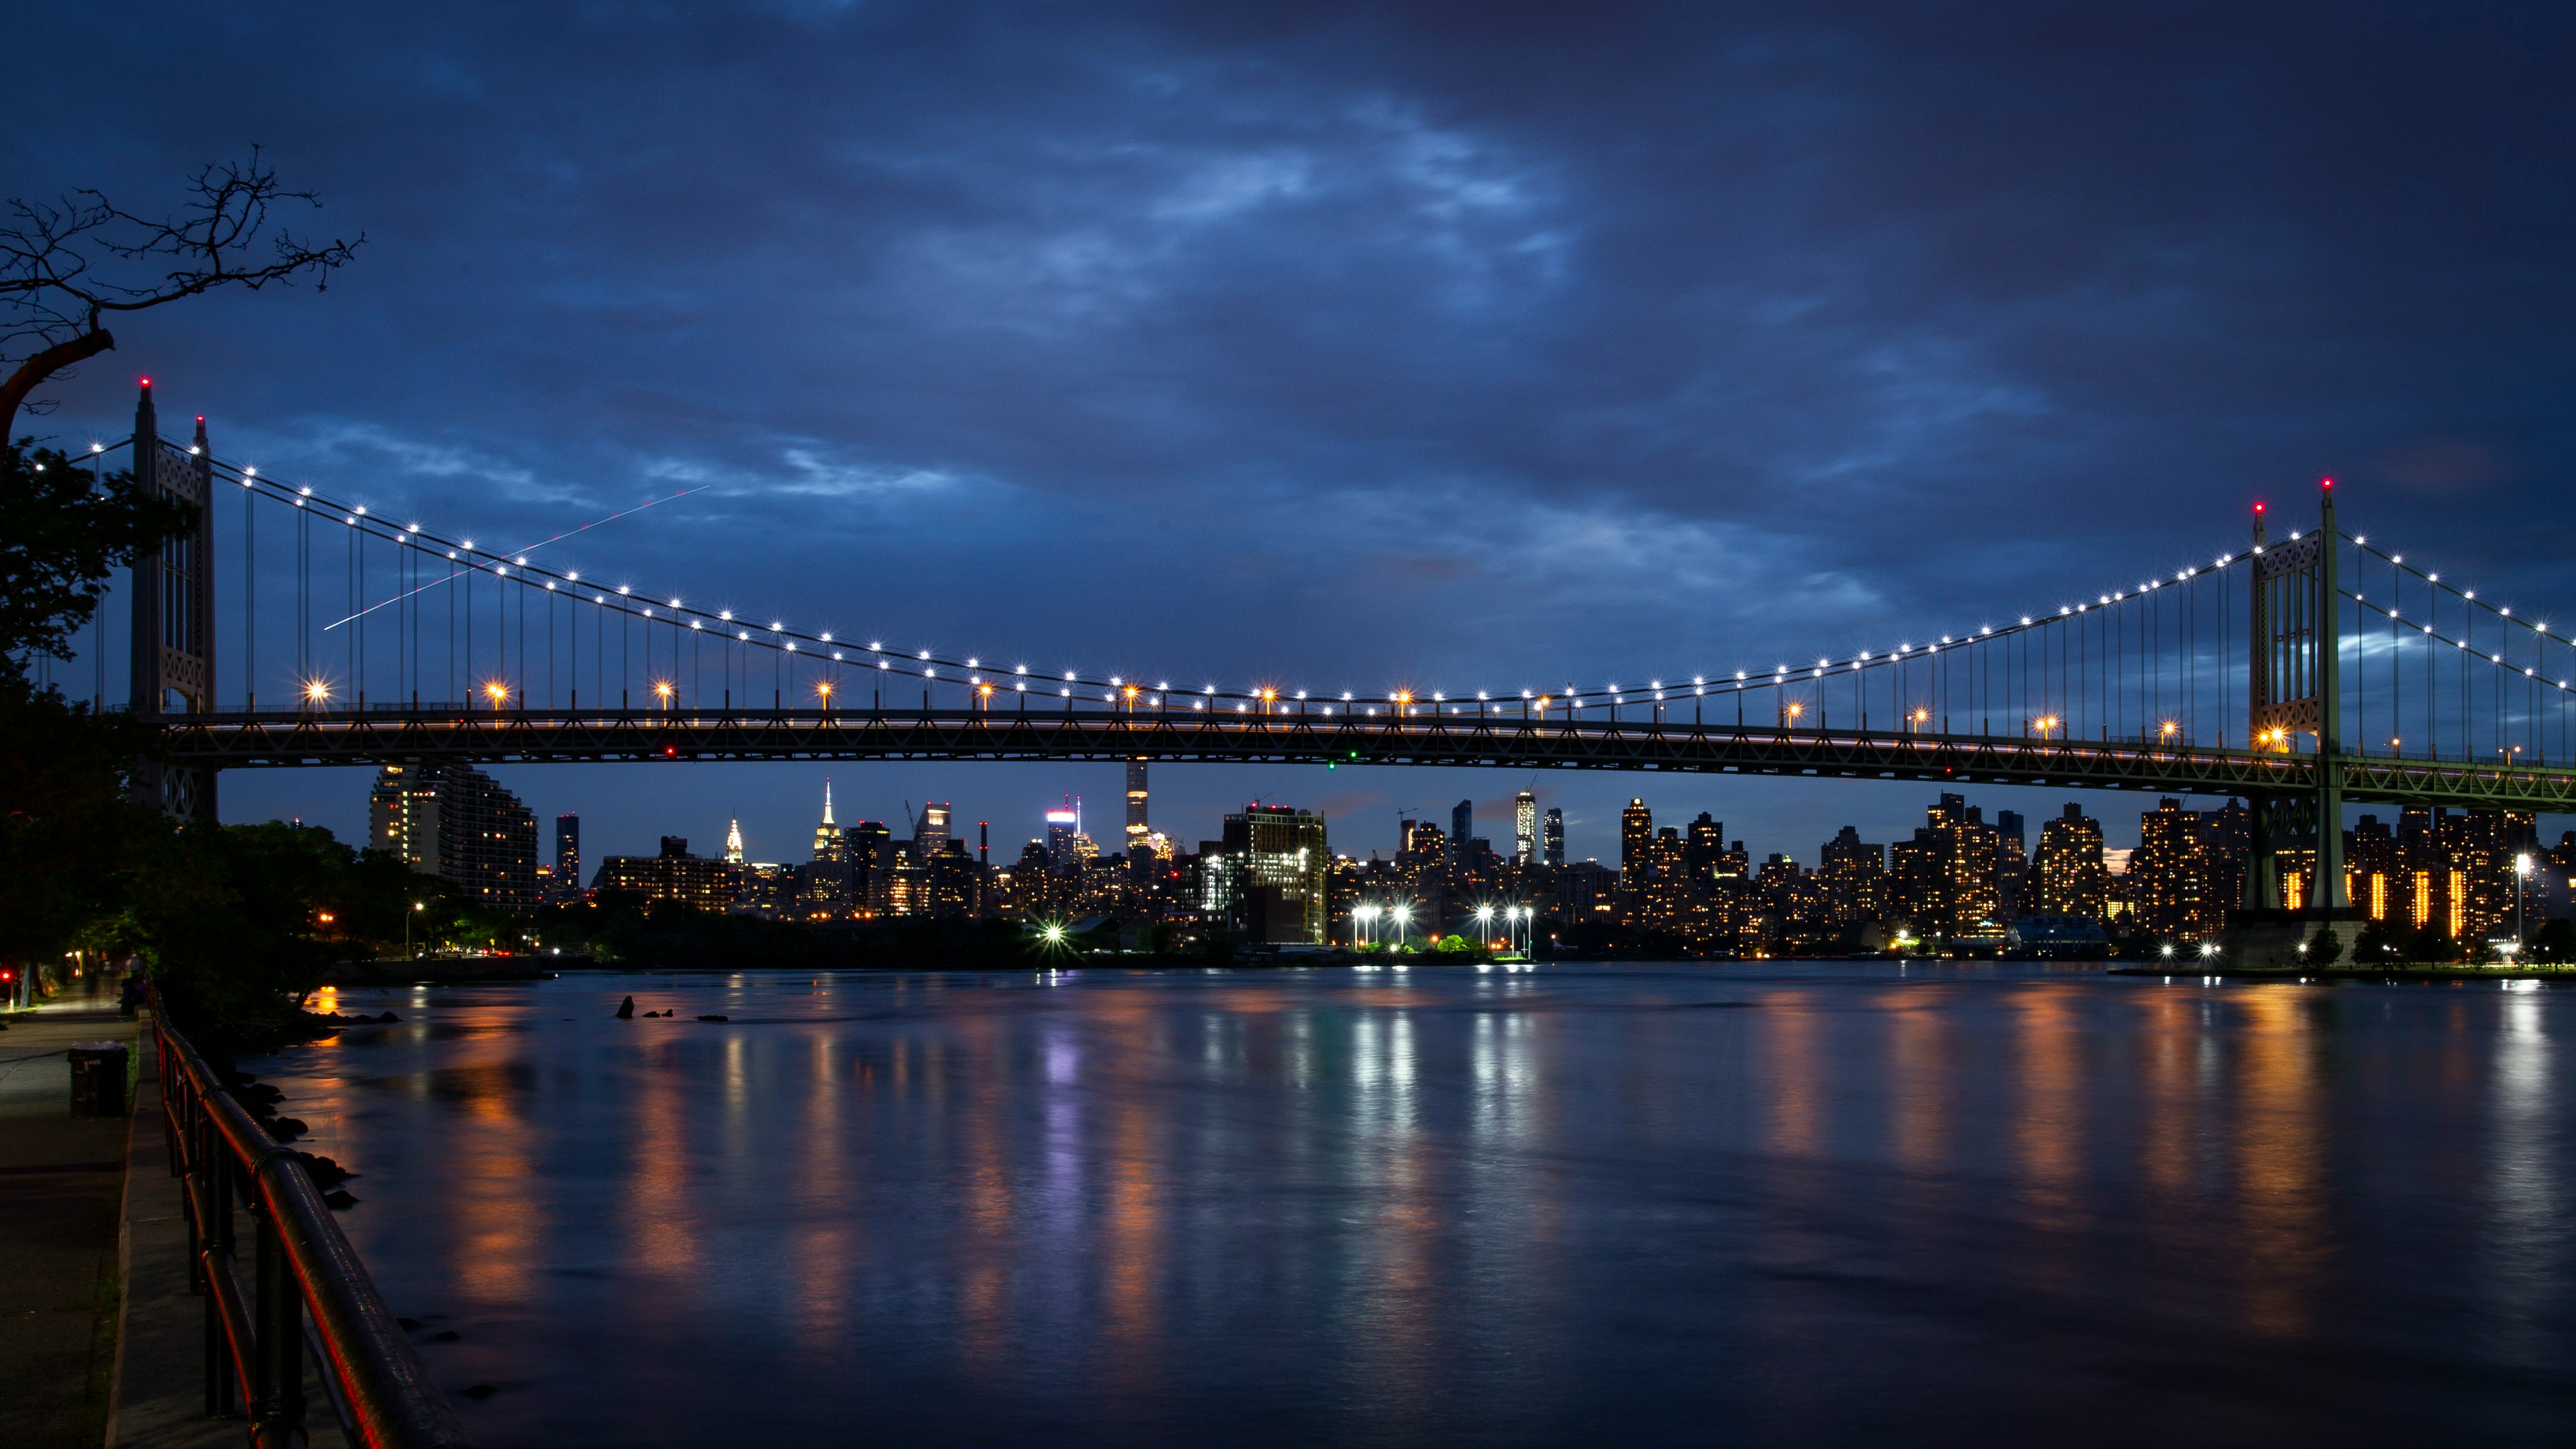 lighted suspension bridge during nighttime